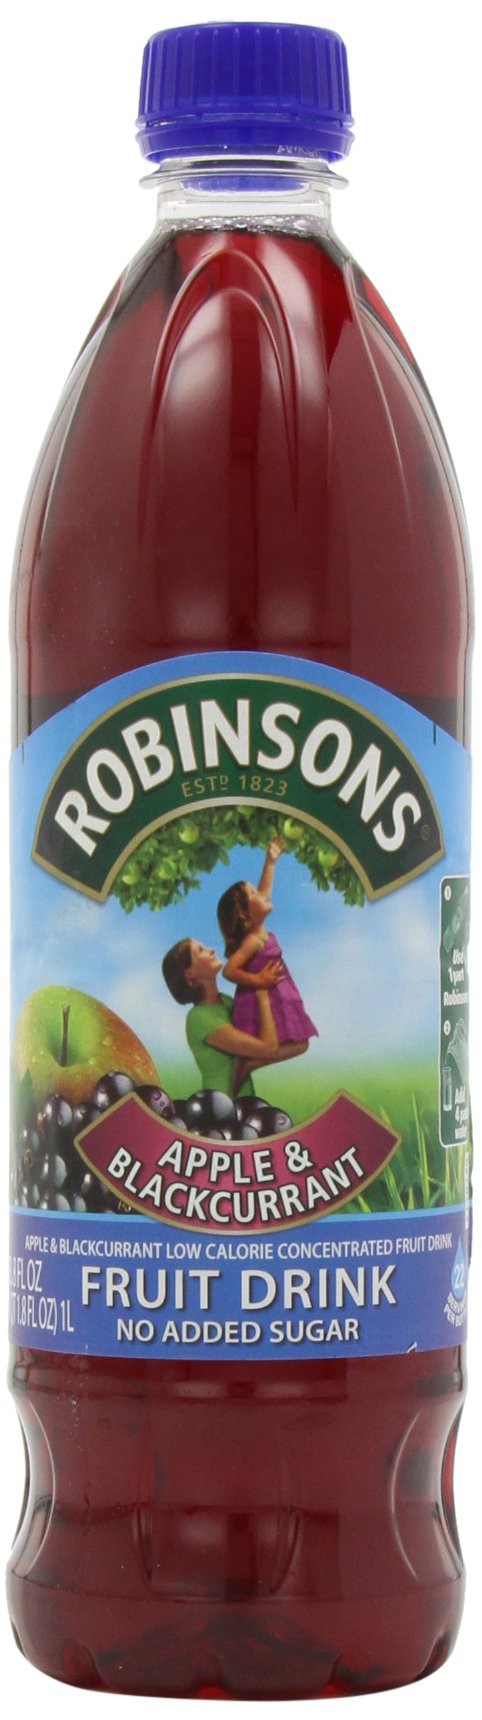 Robinsons Apple Blackcurrant Squash Juice 1 liter Pack of 12